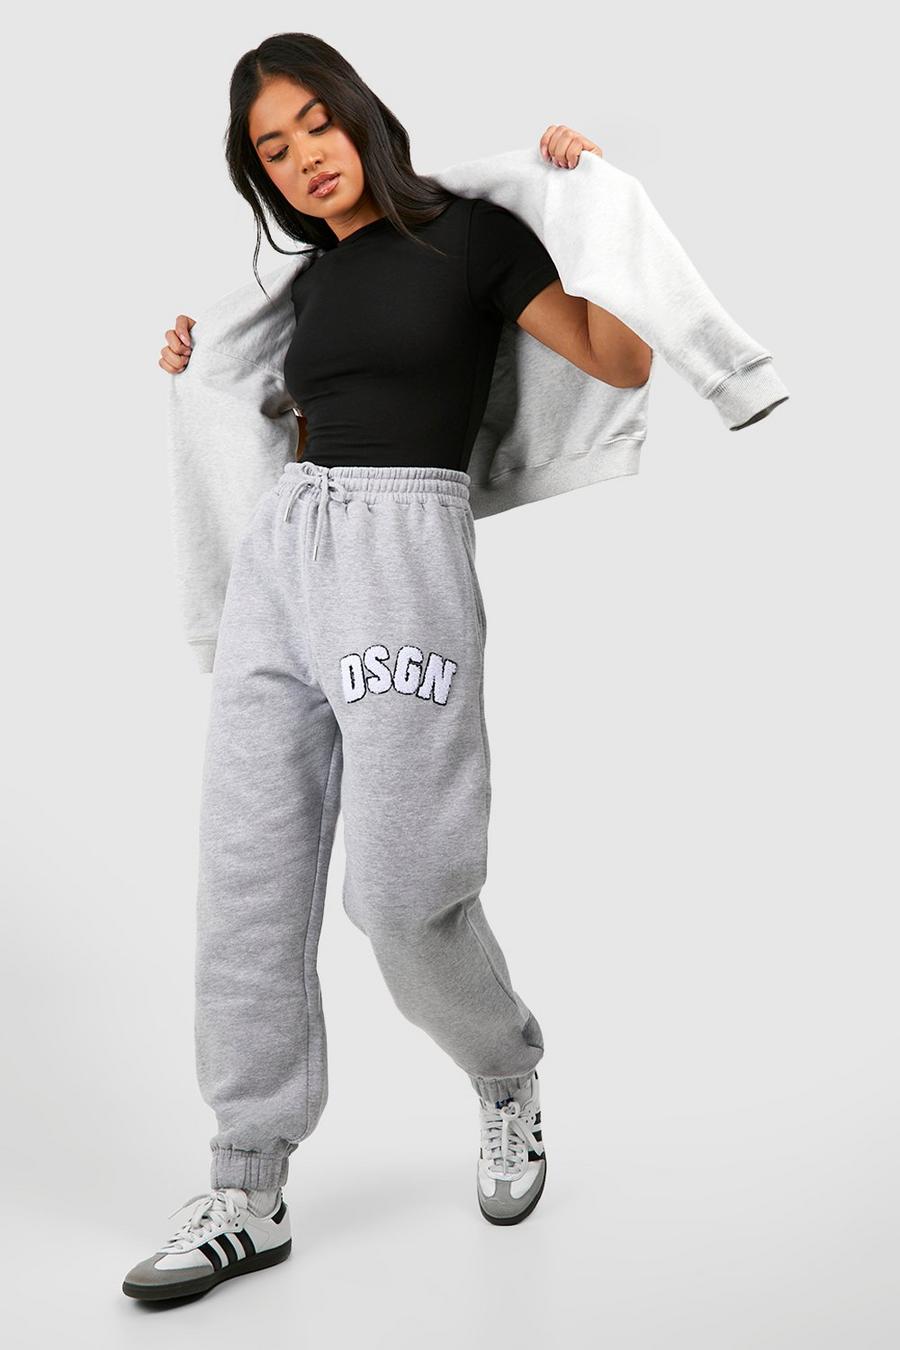 Pantalón deportivo Petite con aplique Dsgn, Grey